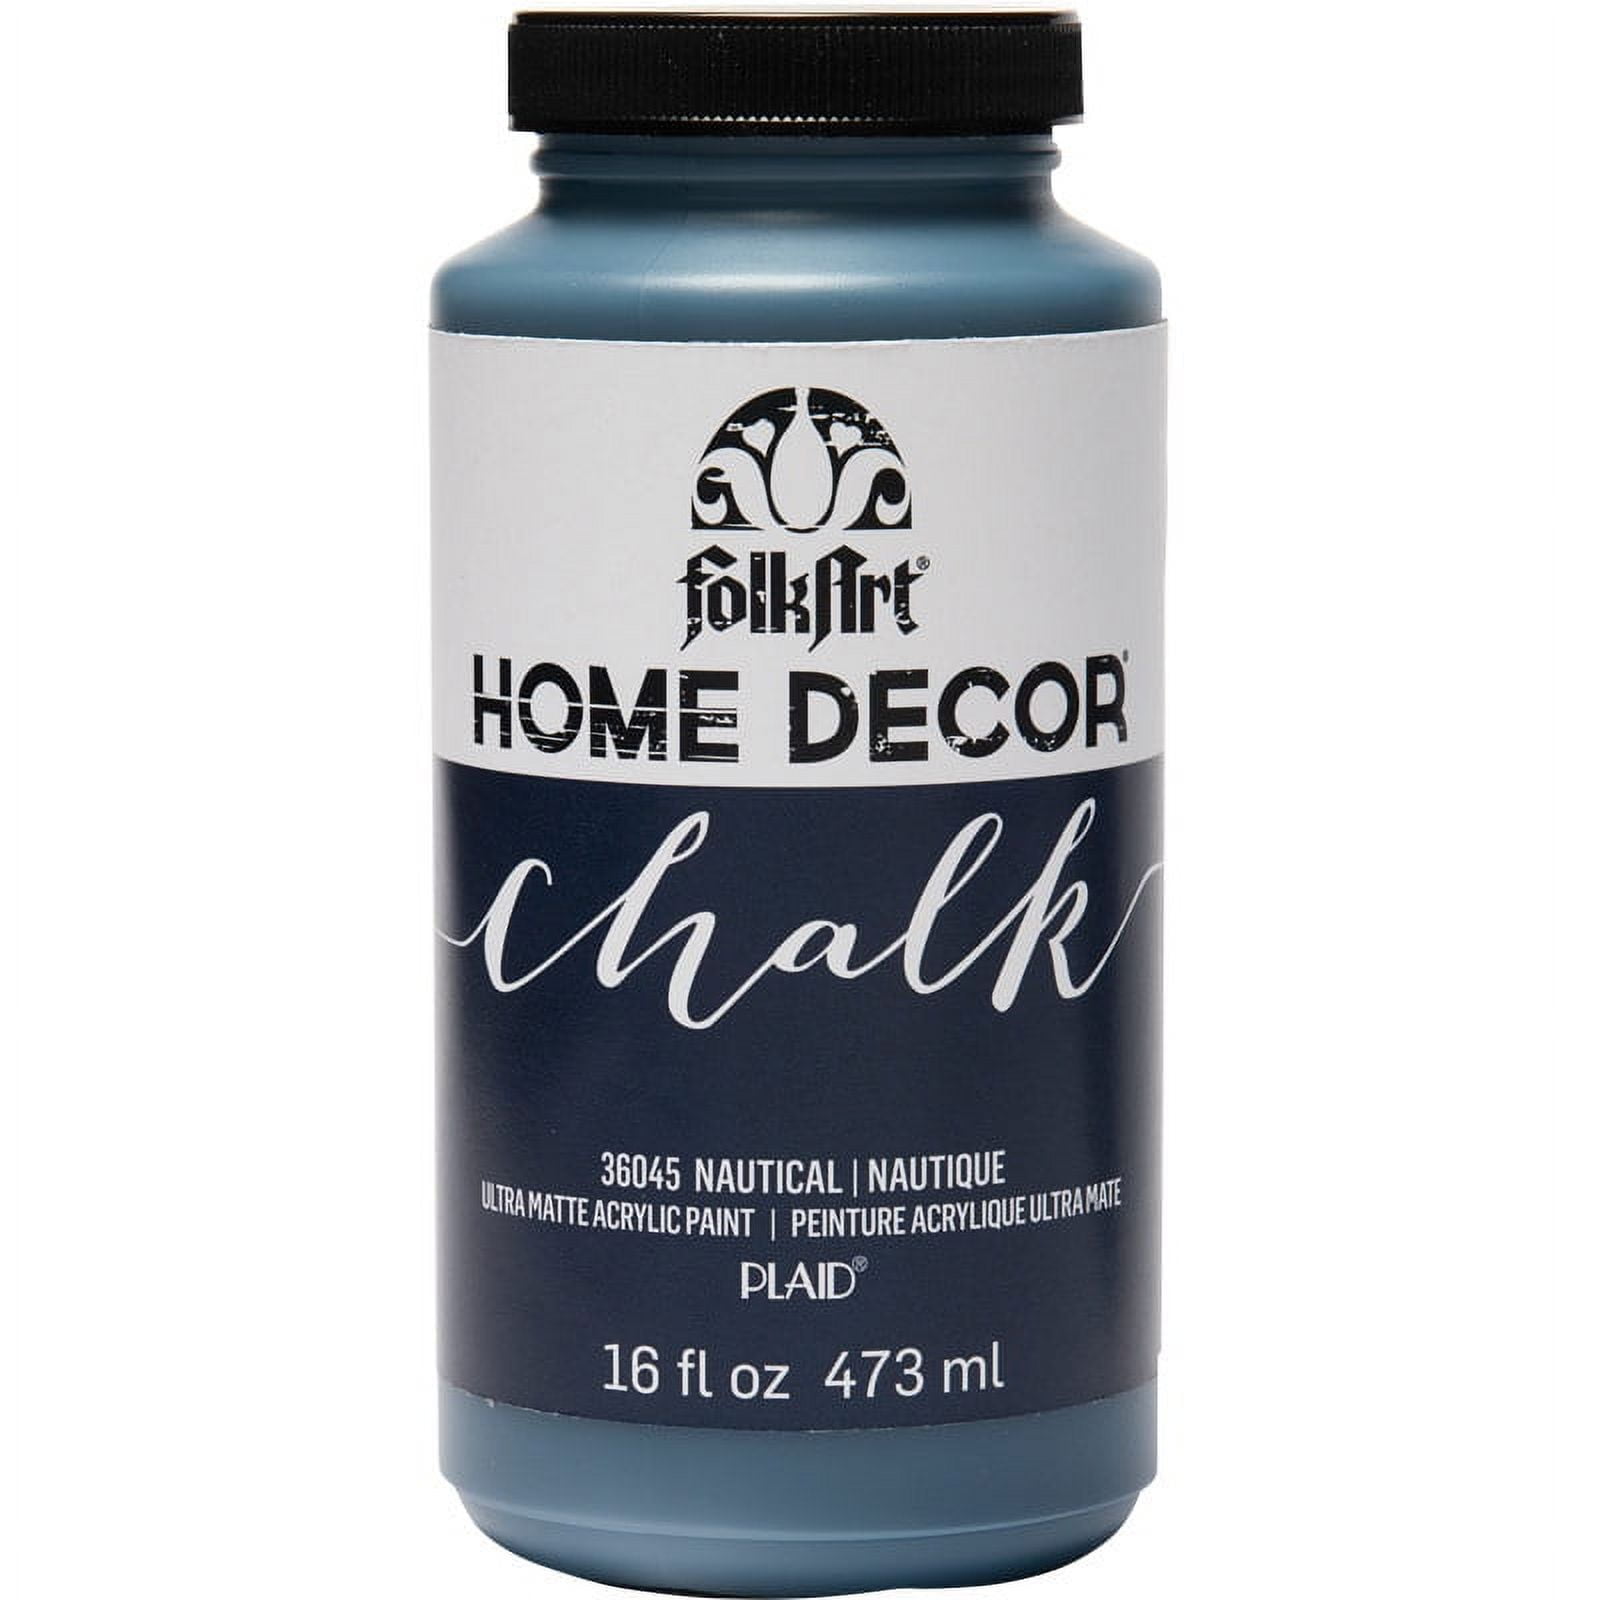 CrafTreat Midnight Black - Chalk Paint for Wood Furniture, Wall, Home  Decor, Glass, DIY Craft - Matte Acrylic Chalk Paint Black Paint - 60ml Each